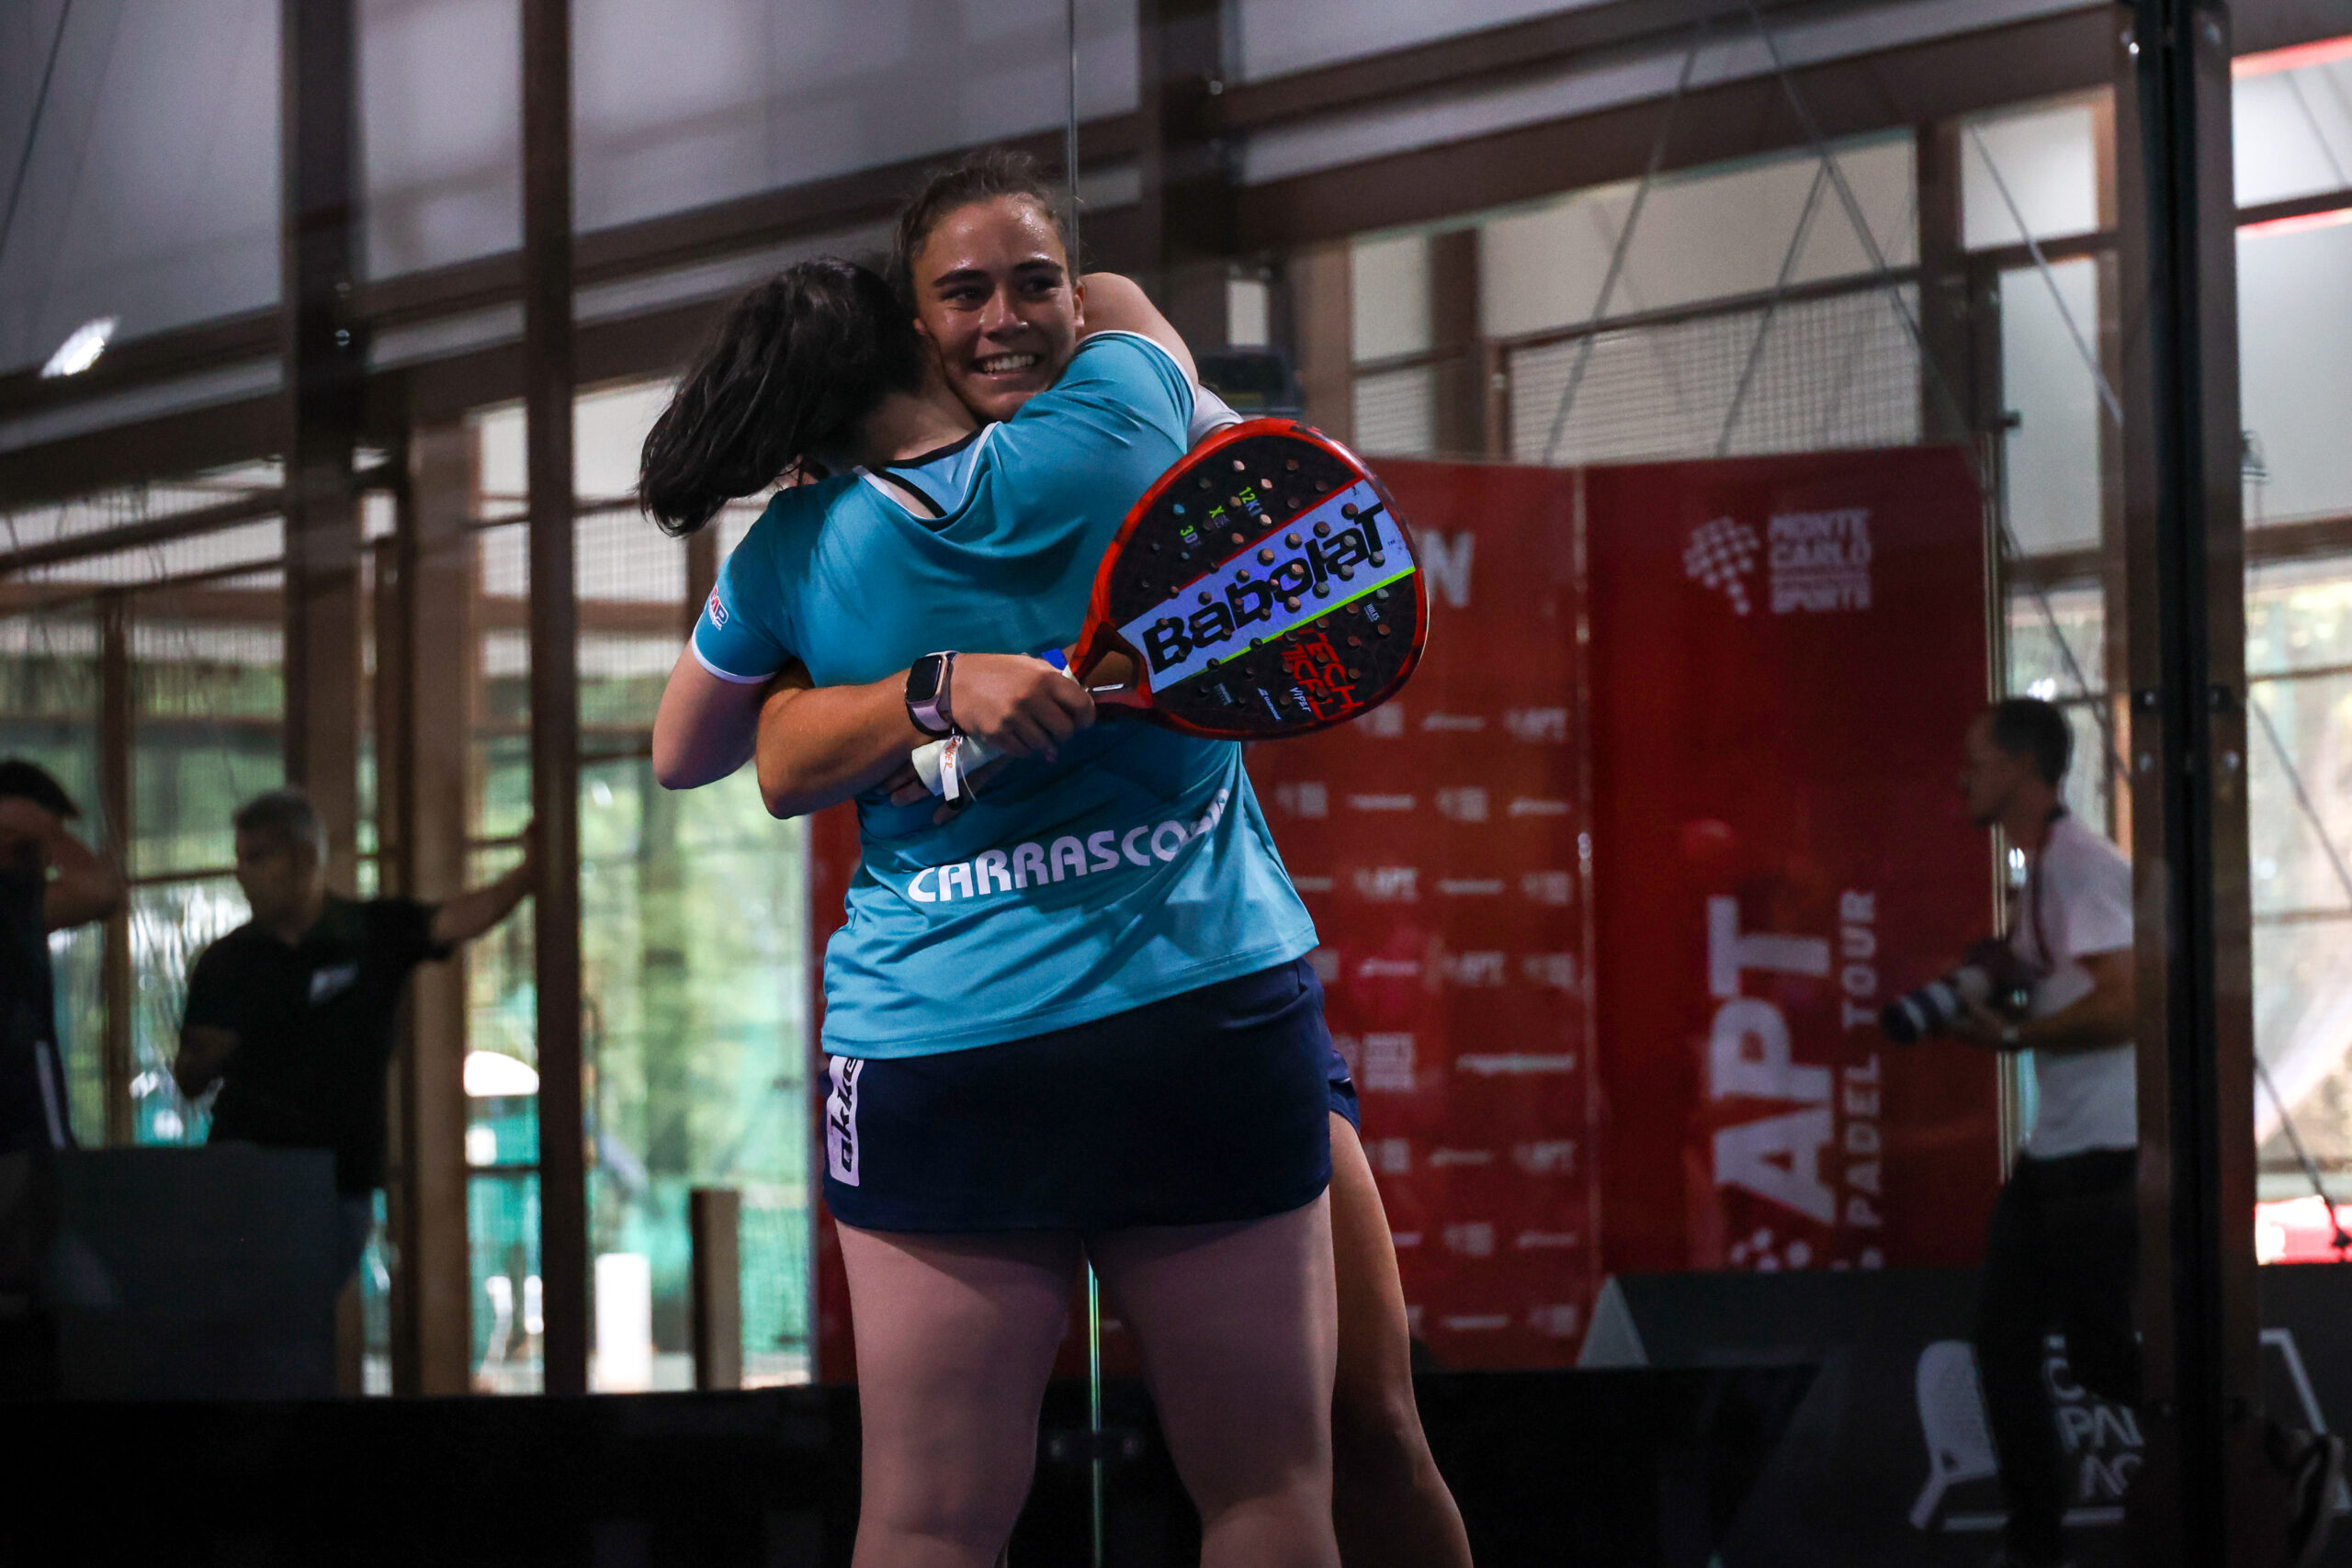 APT Oeiras Open – campeões Carrascosa e Martinez